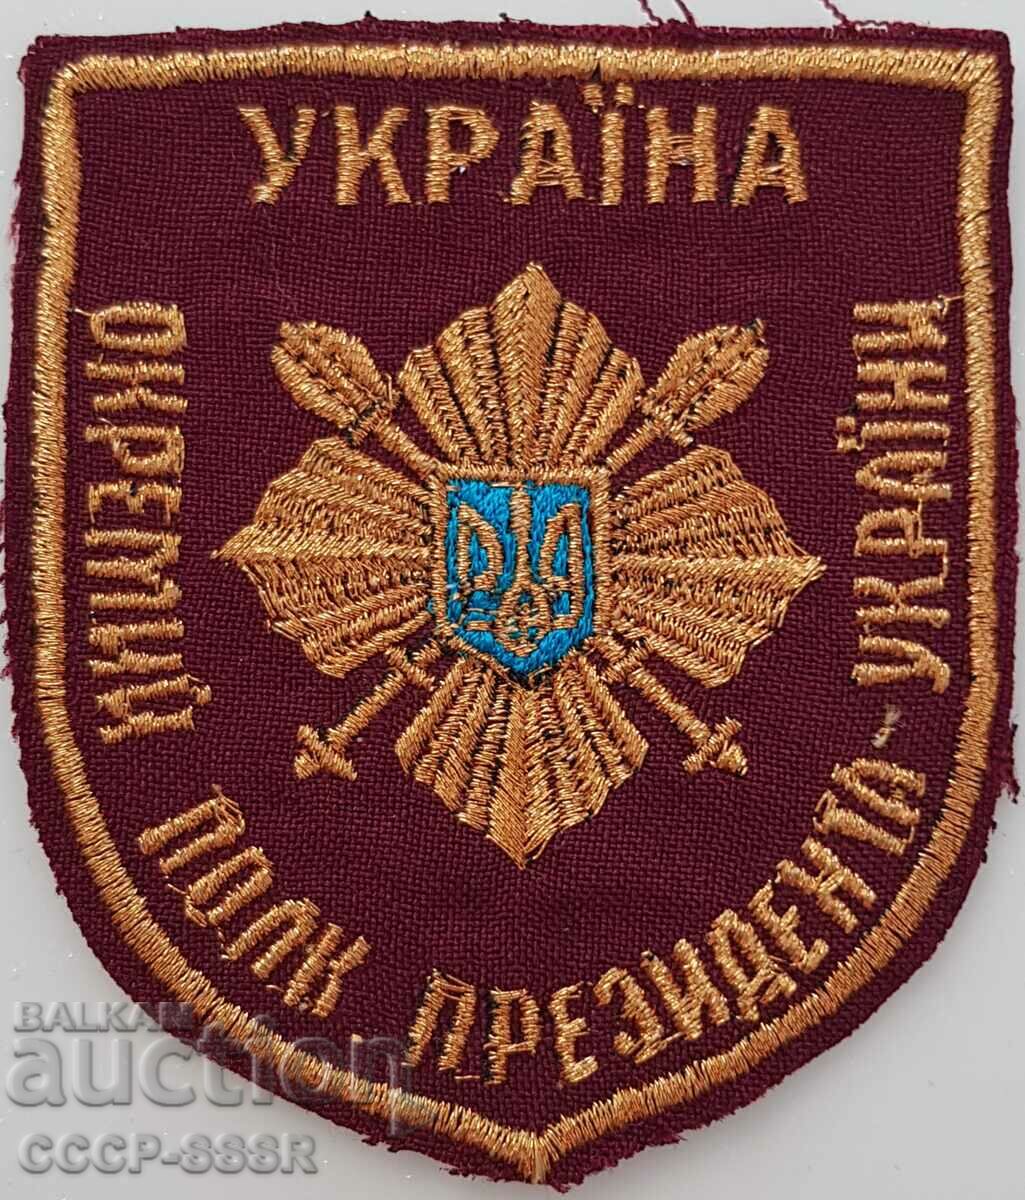 Ukraine, chevron, uniform patch, Presidential Regiment